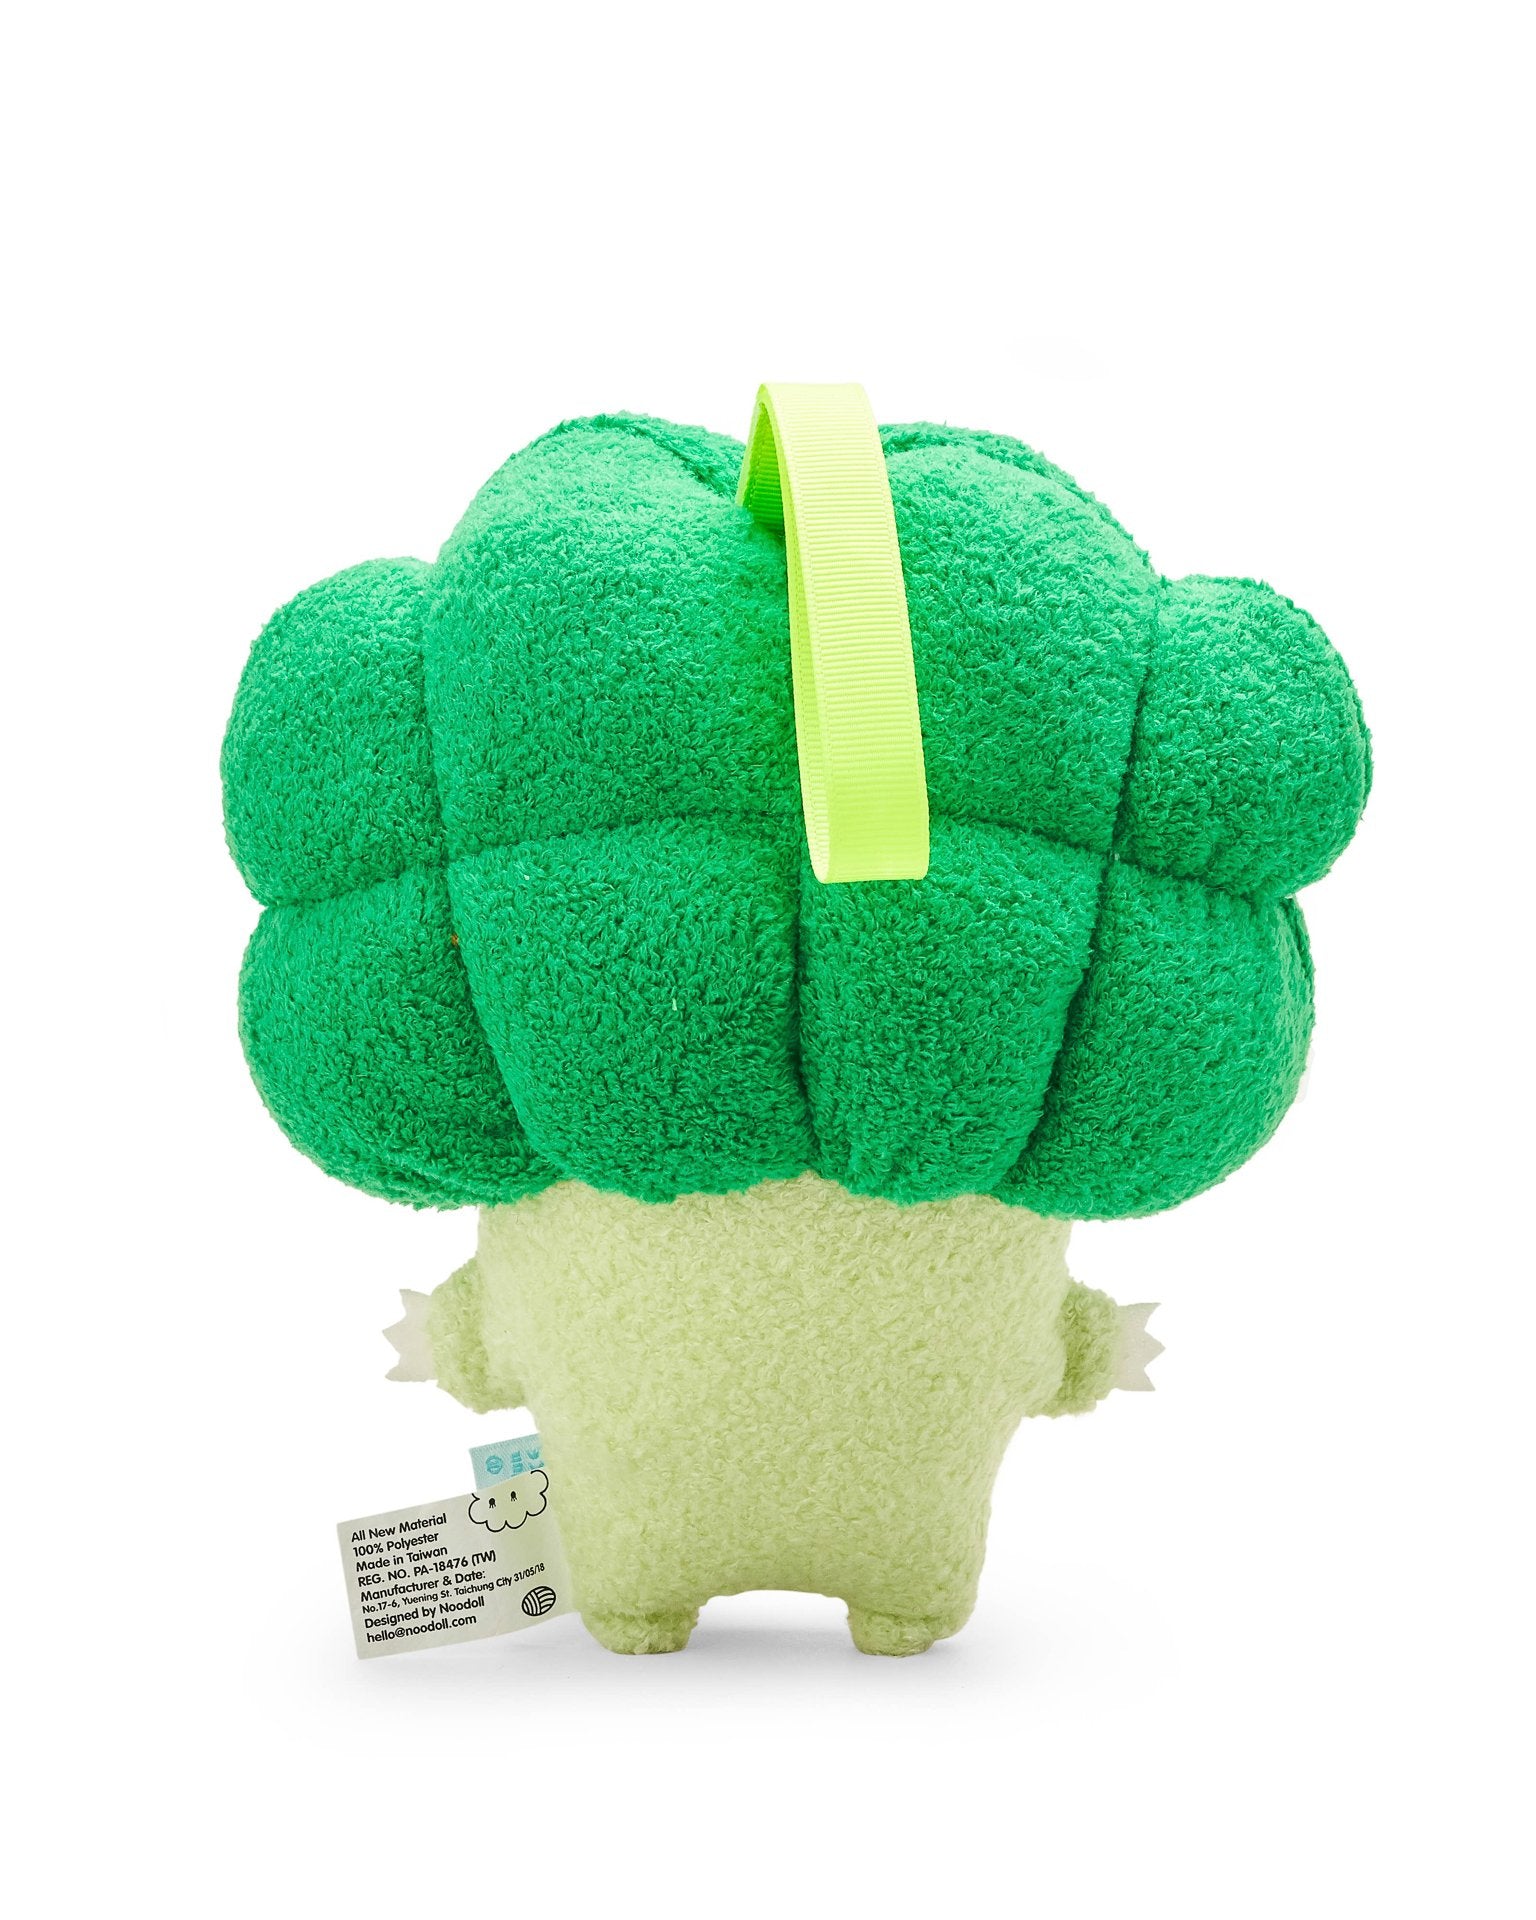 Little noodoll play ricecoli broccoli mini